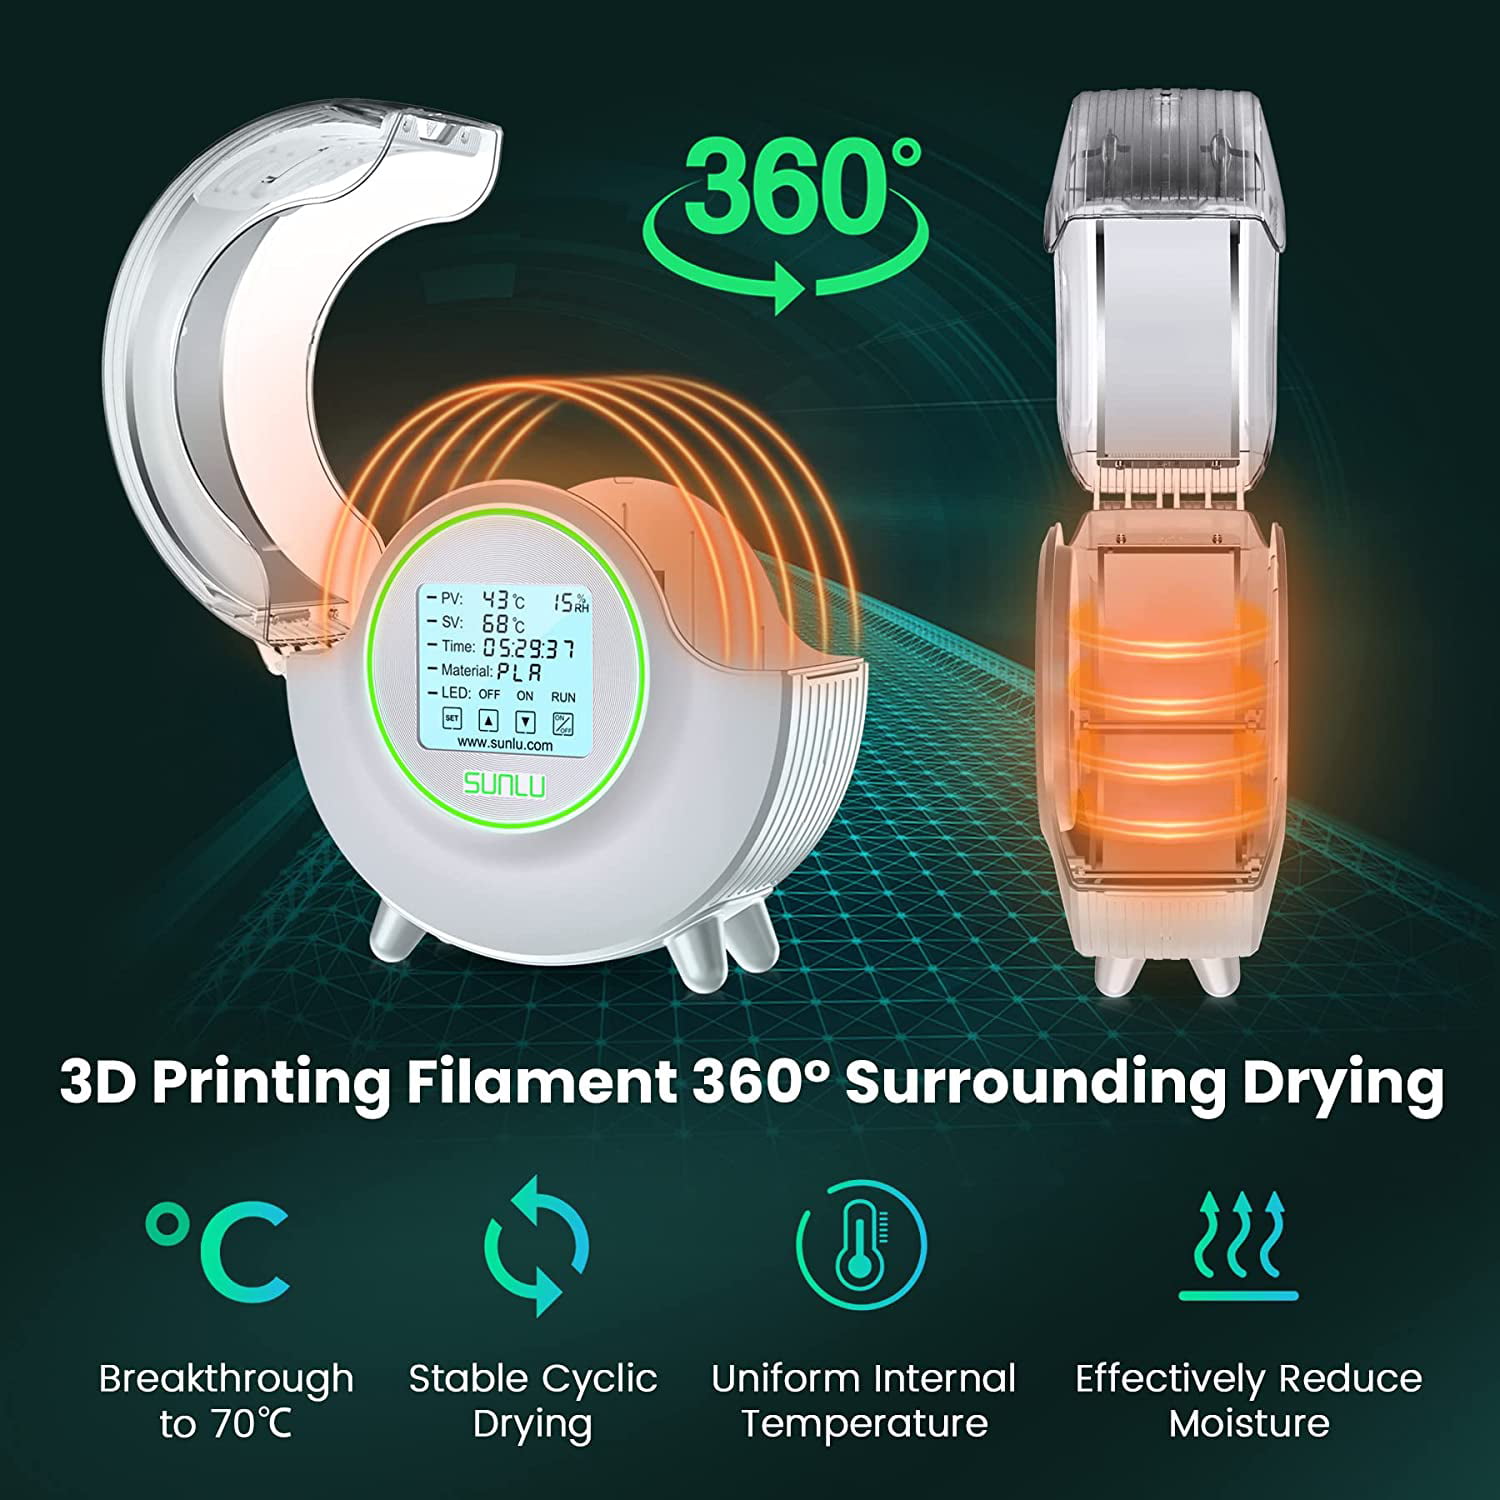 SUNLU FilaDryer S2 3D printing filament dryer - Geeky Gadgets